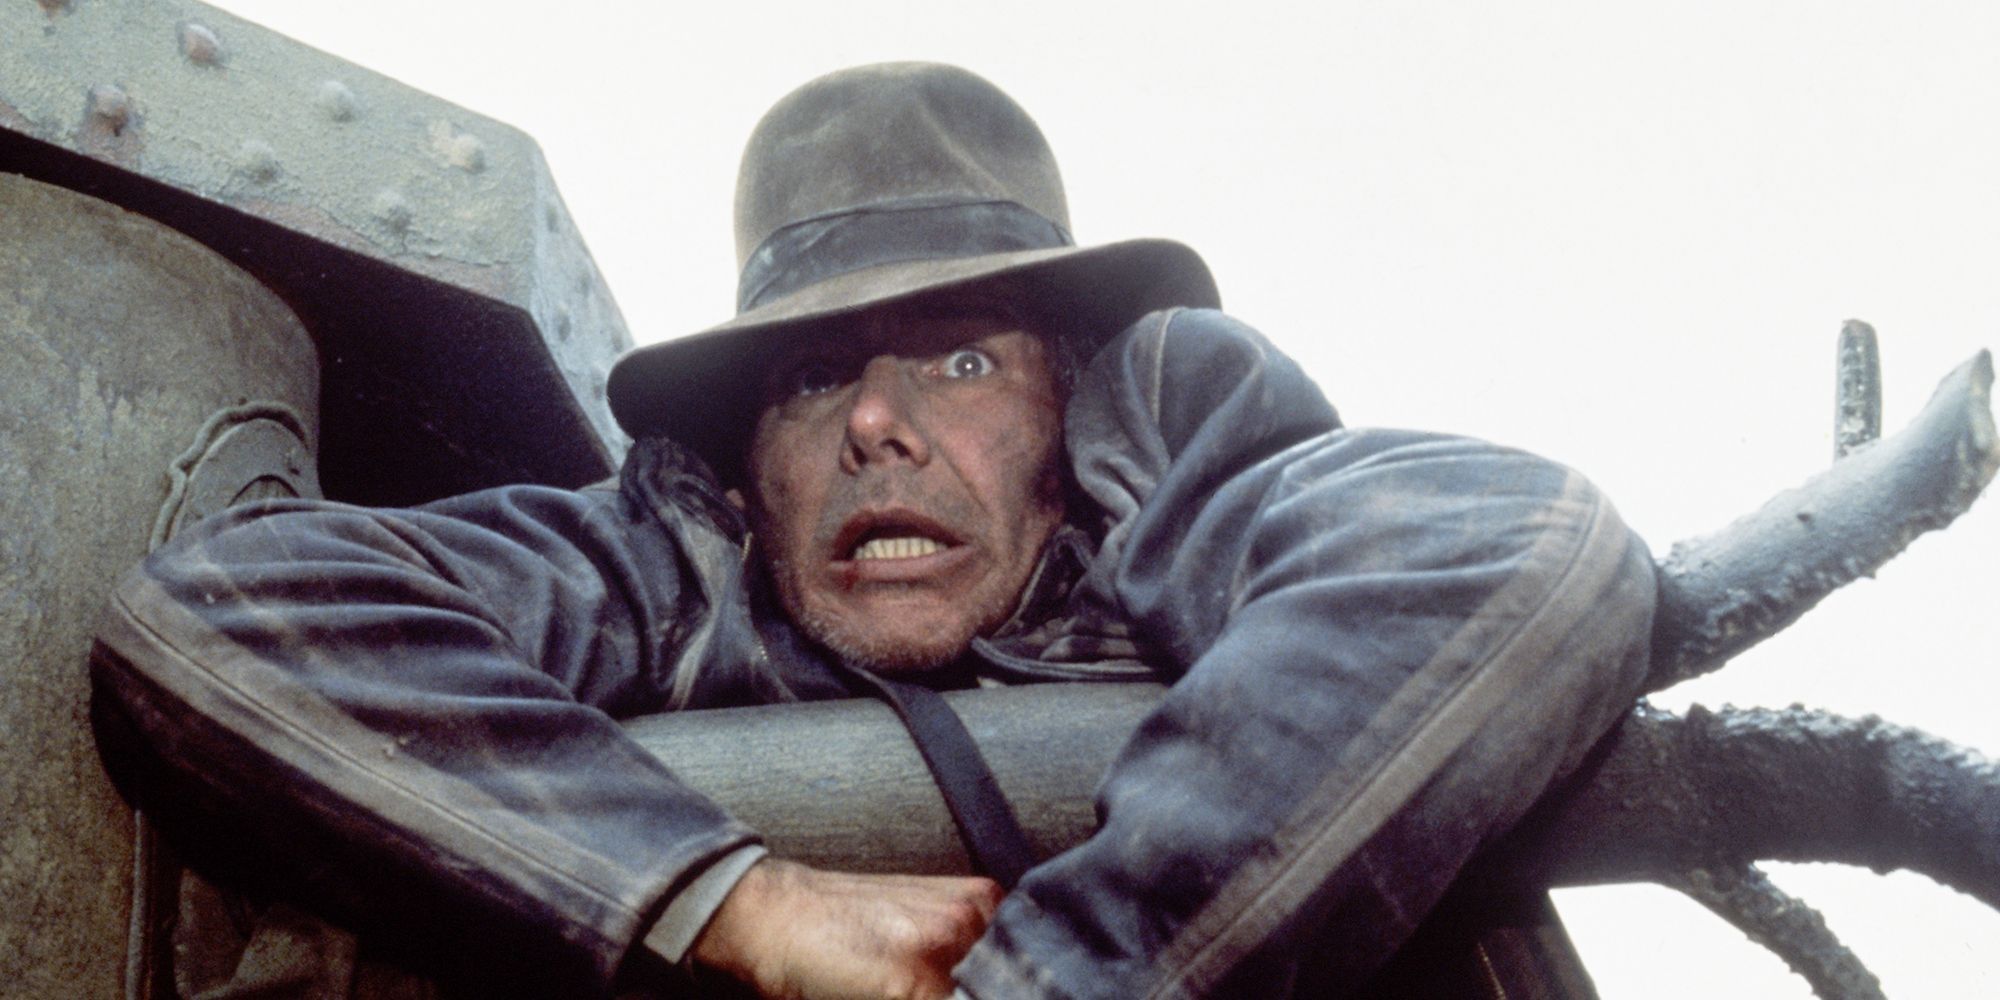 Indiana Jones 5 Set Photos Reveal Toby Jones’ New Indy Sidekick